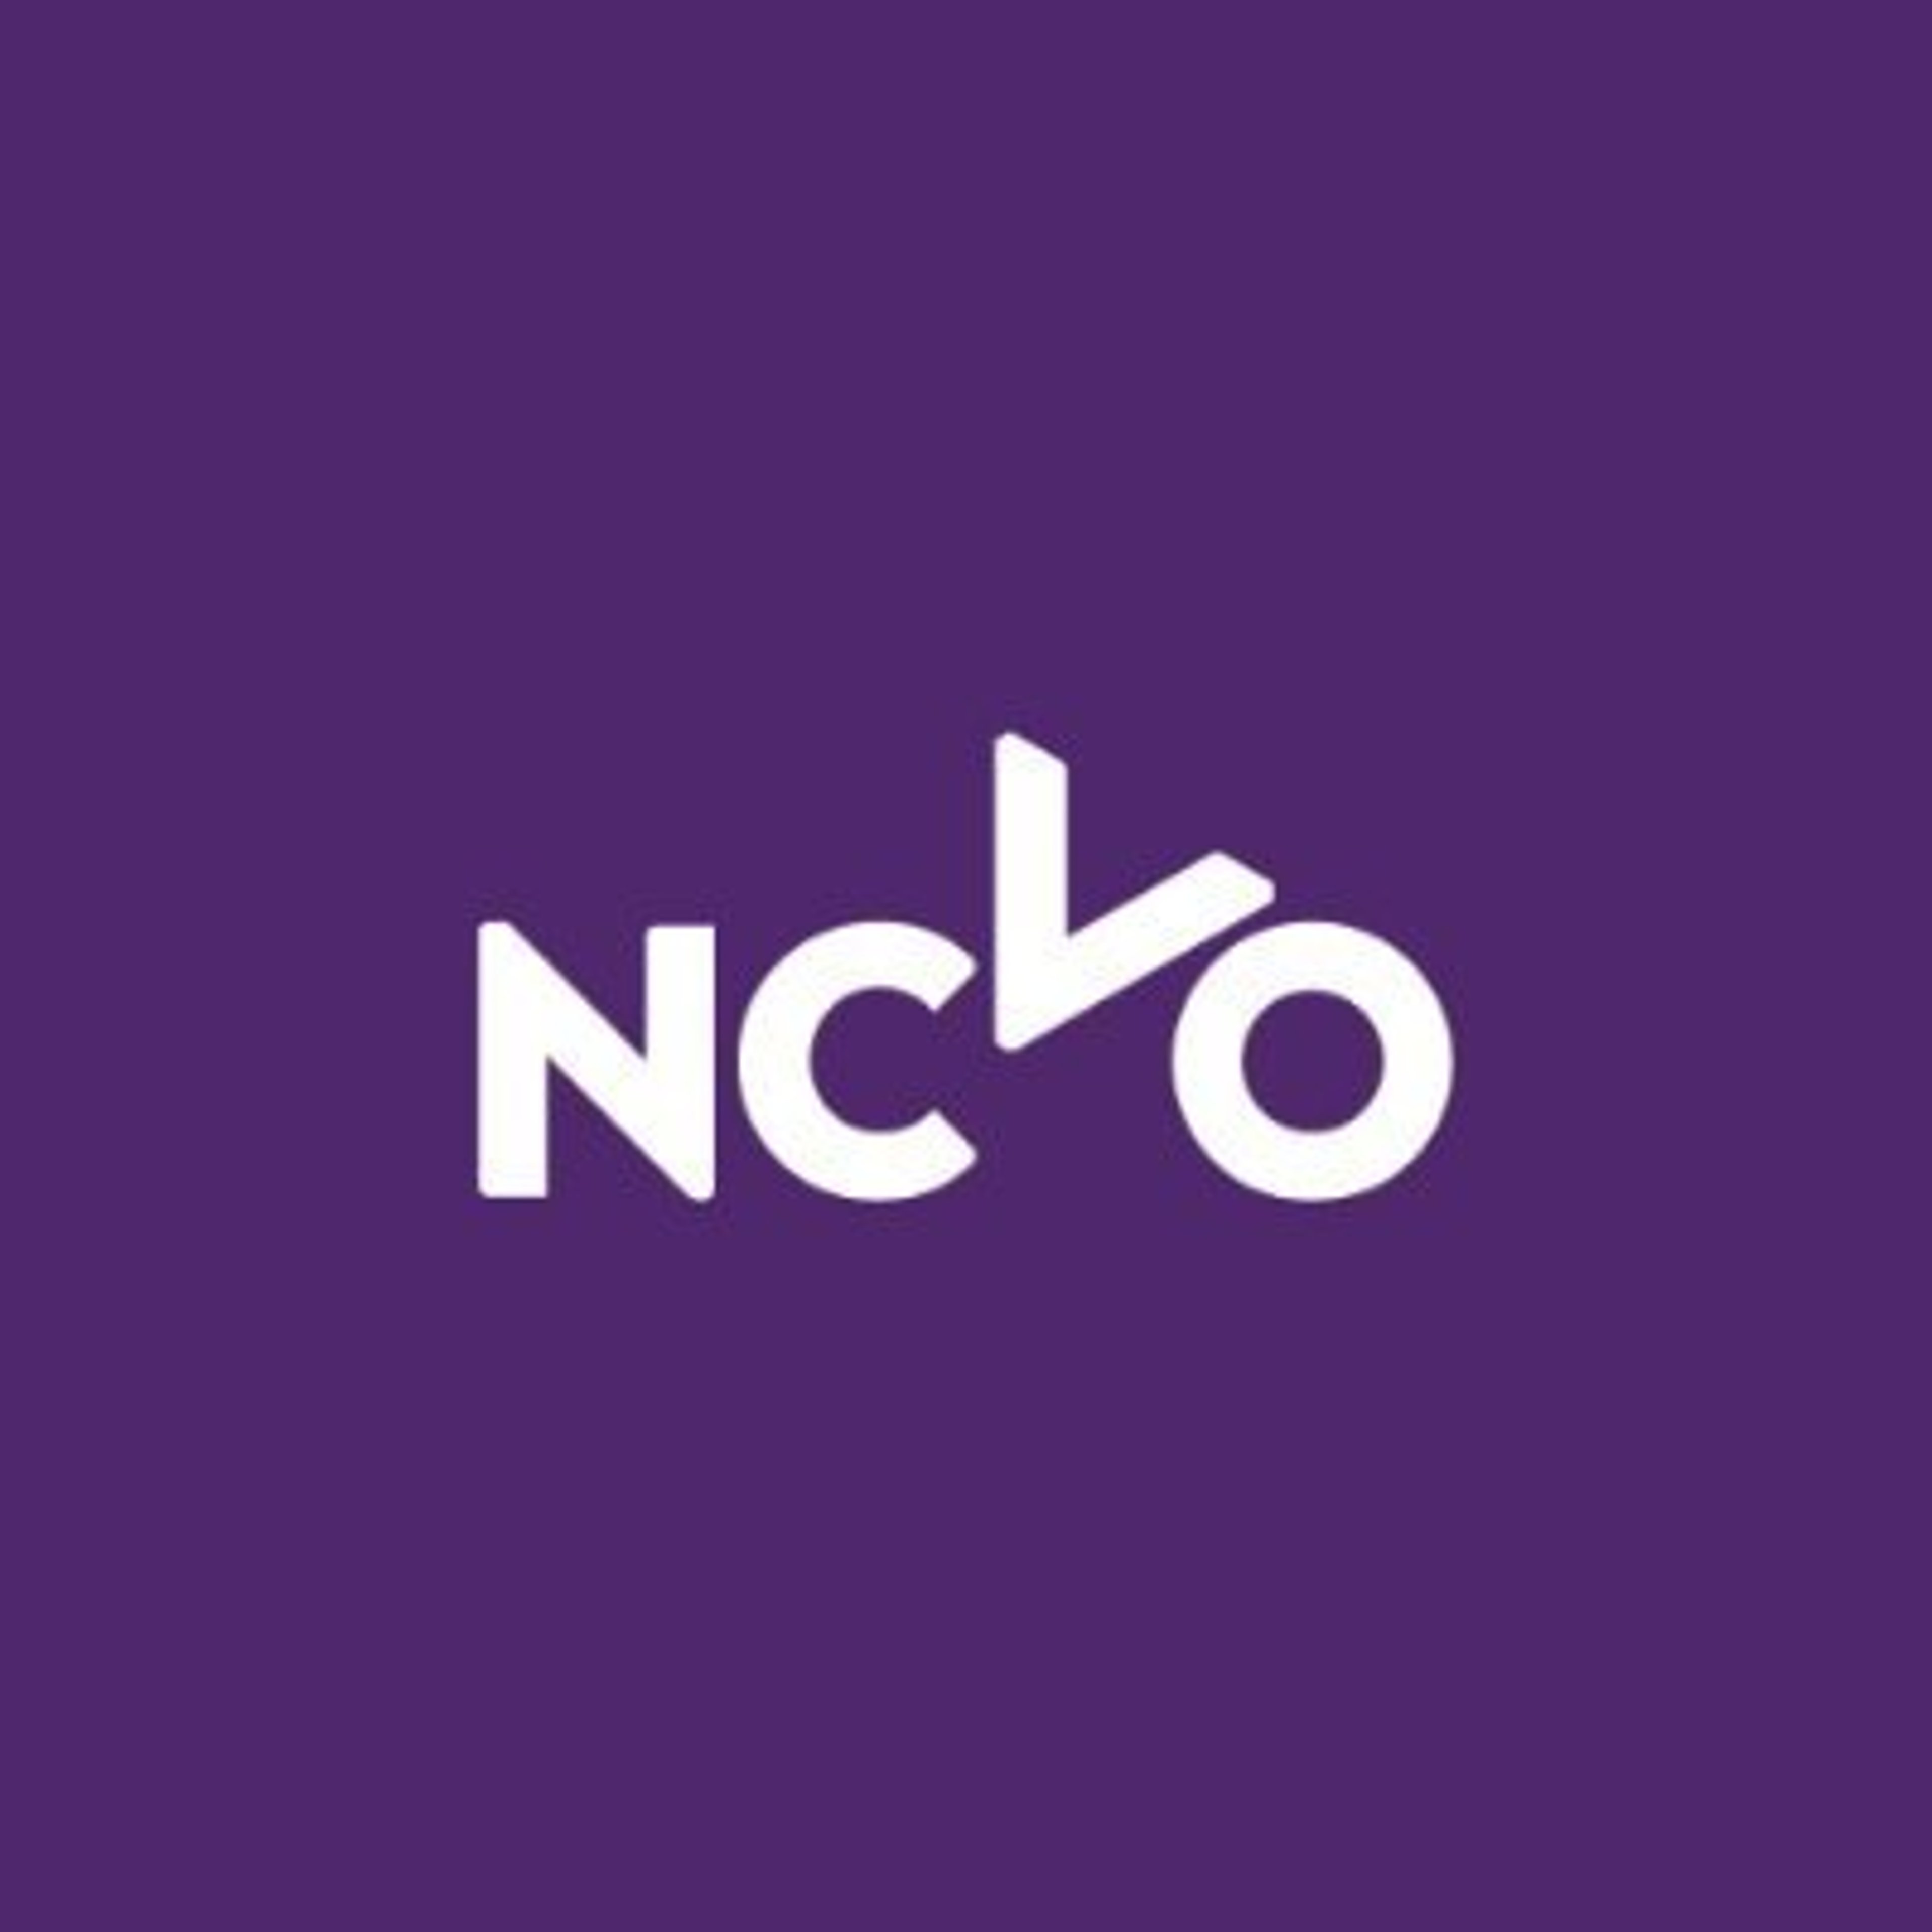 Image - NCVO purple